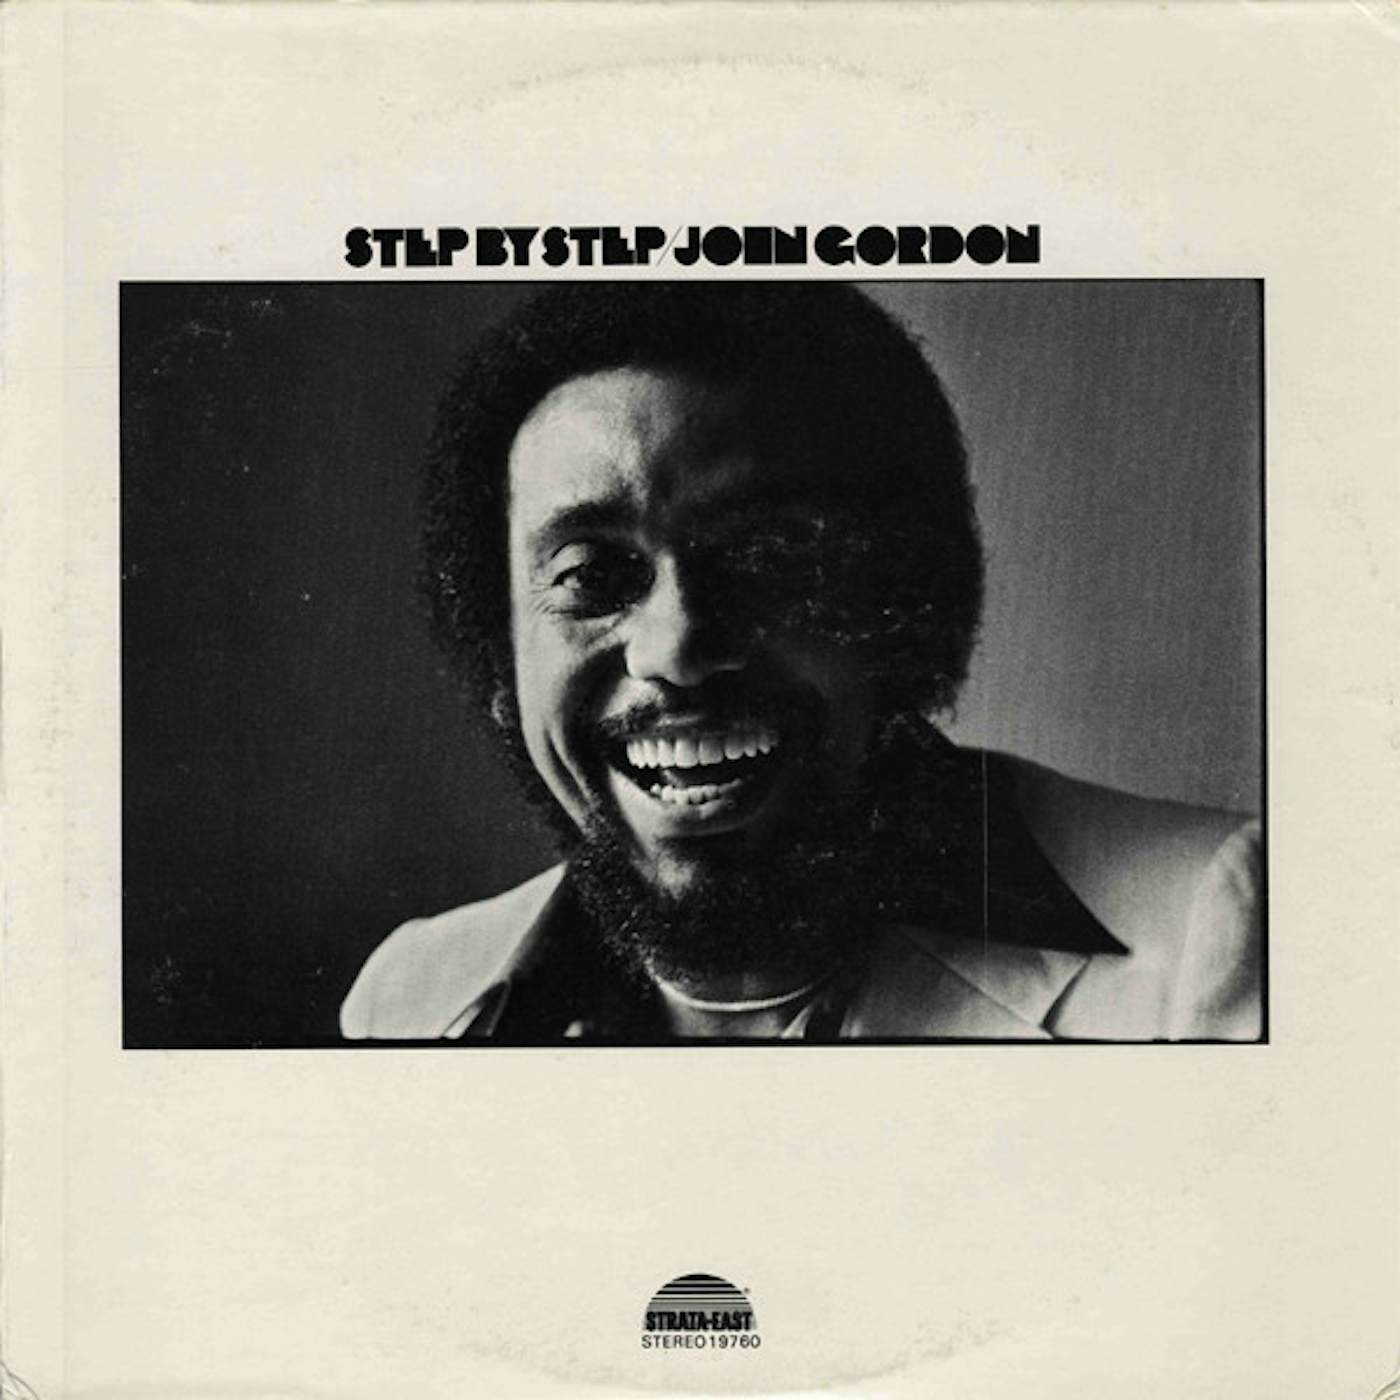 John Gordon Step By Step Vinyl Record